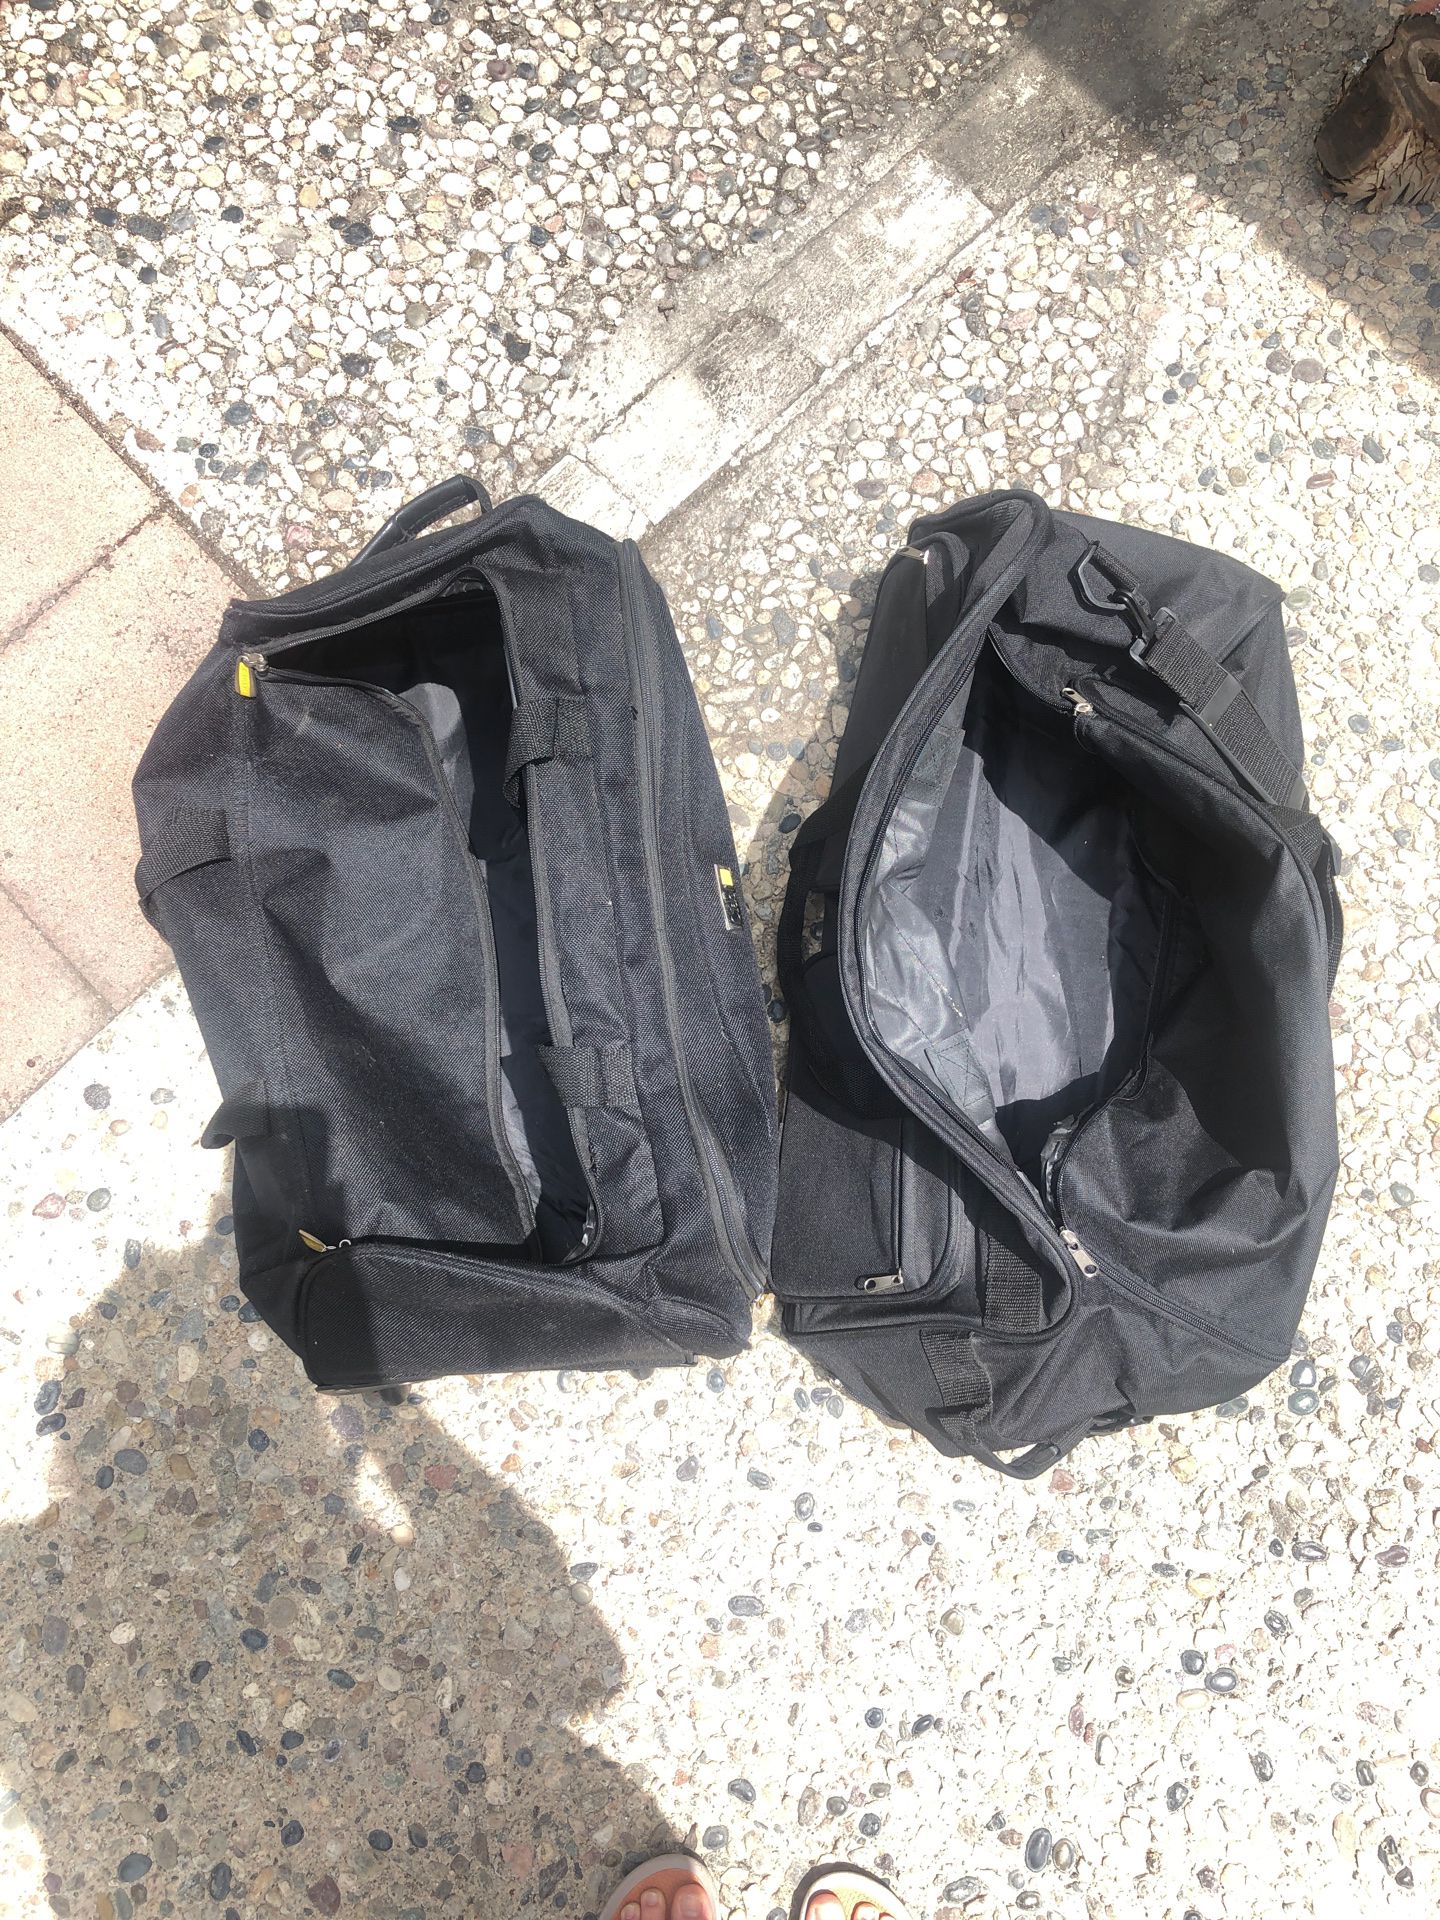 Two duffle bags